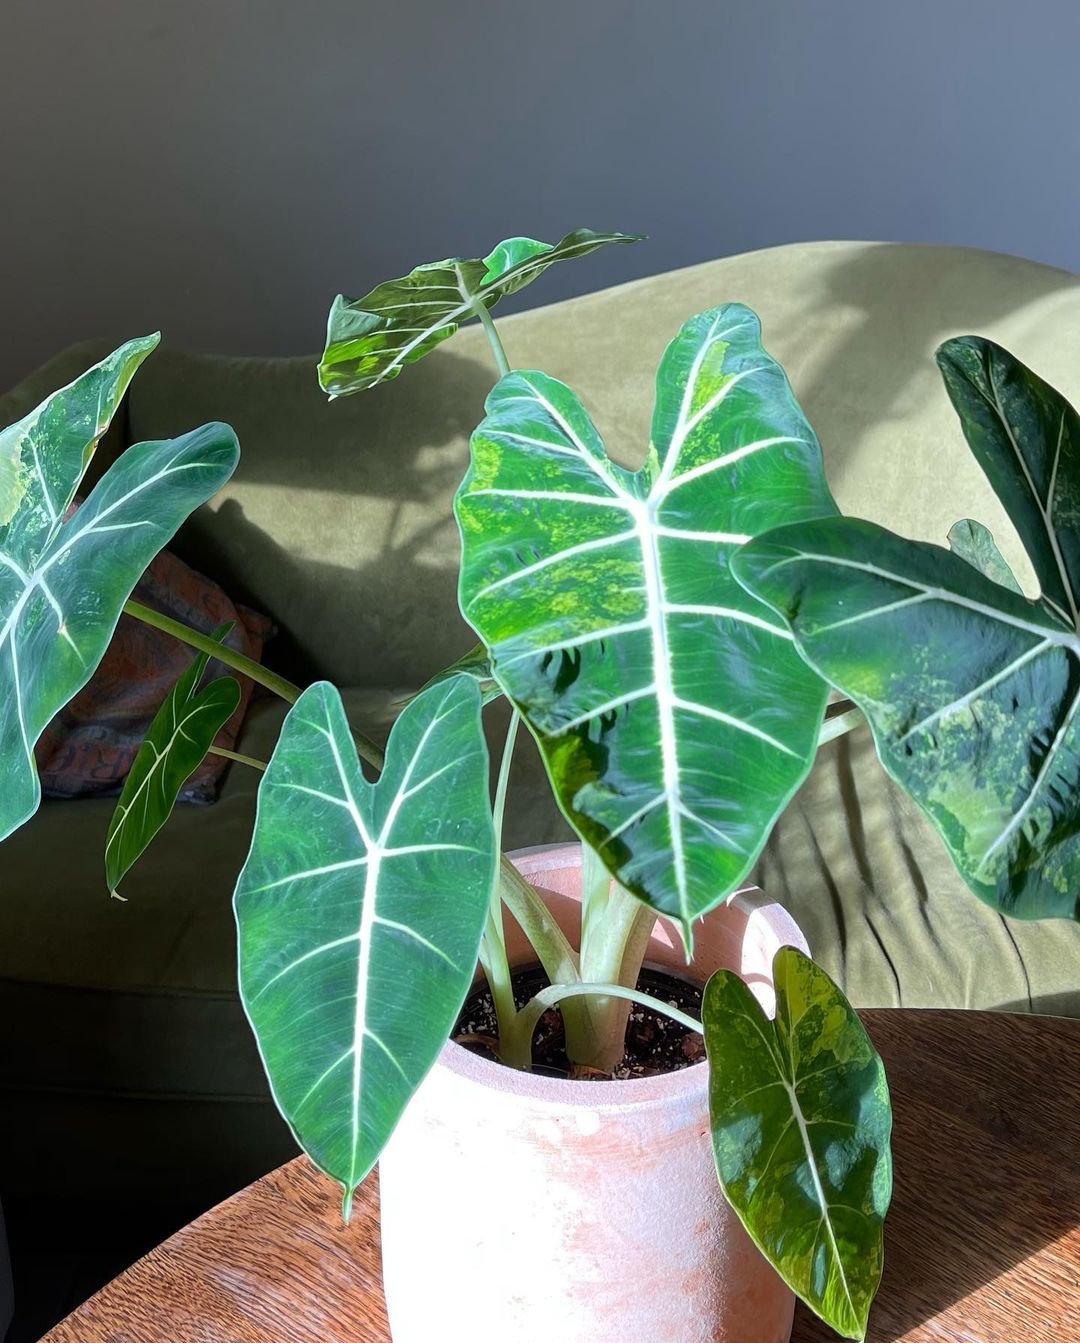 Alocasia Frydek: Dark green leaves with white veins, resembling an elephant ear plant